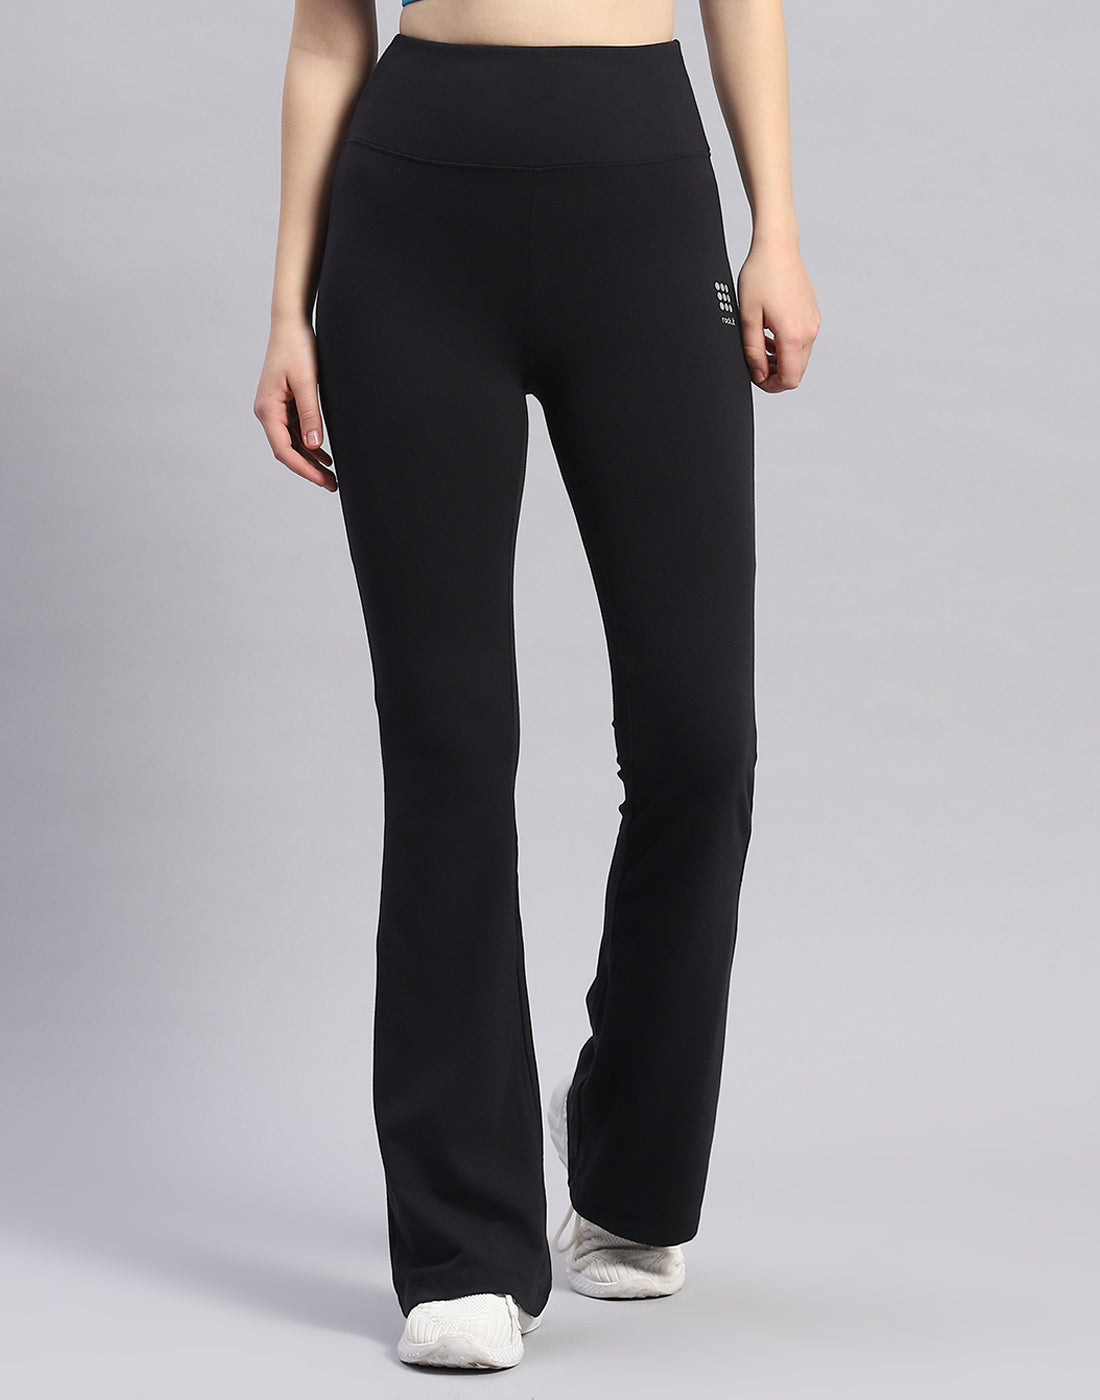 Buy Clovia Black High Rise Yoga Pants for Women's Online @ Tata CLiQ